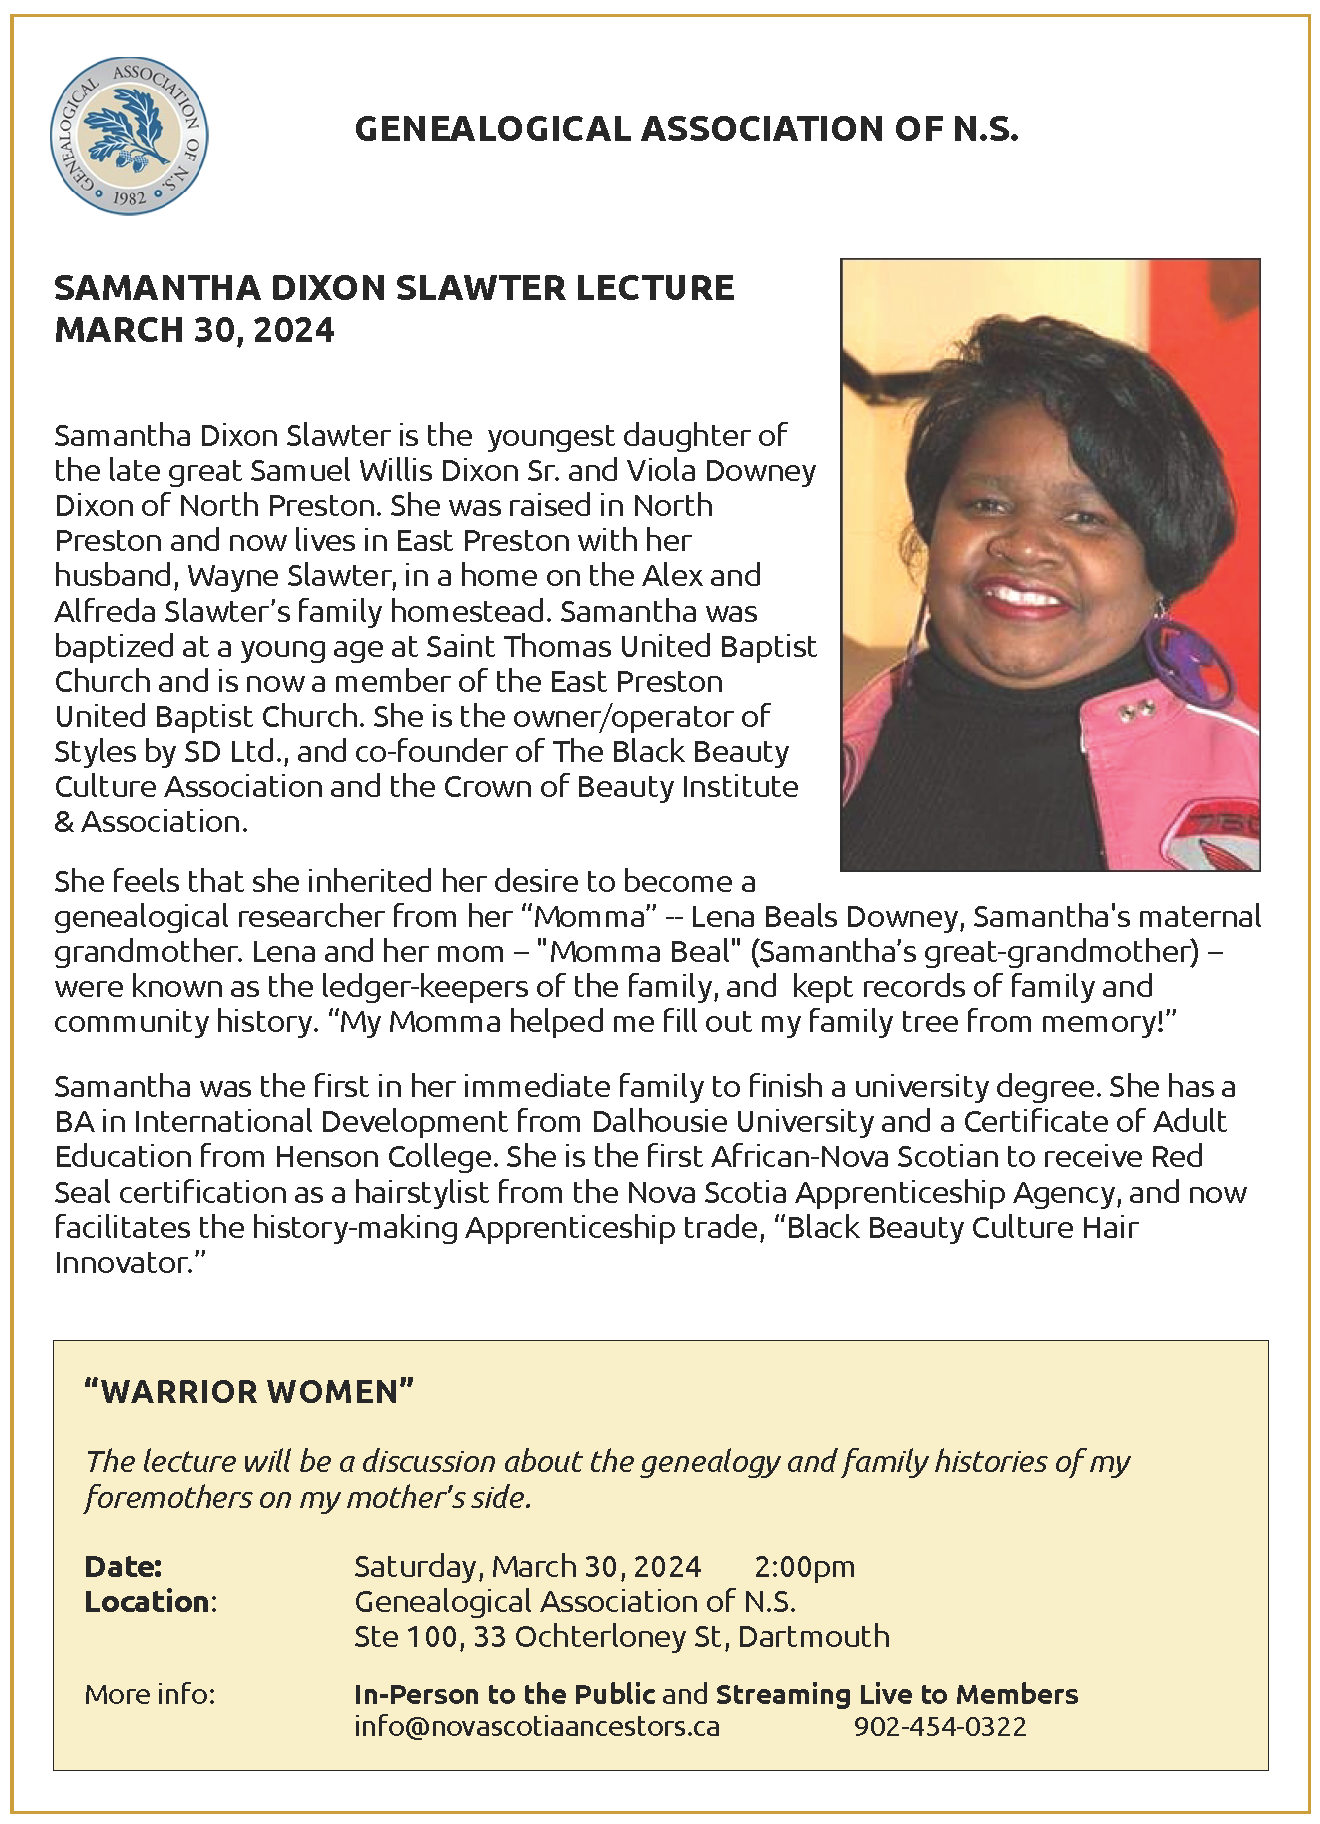 Samantha Dixon Slawter Lecture